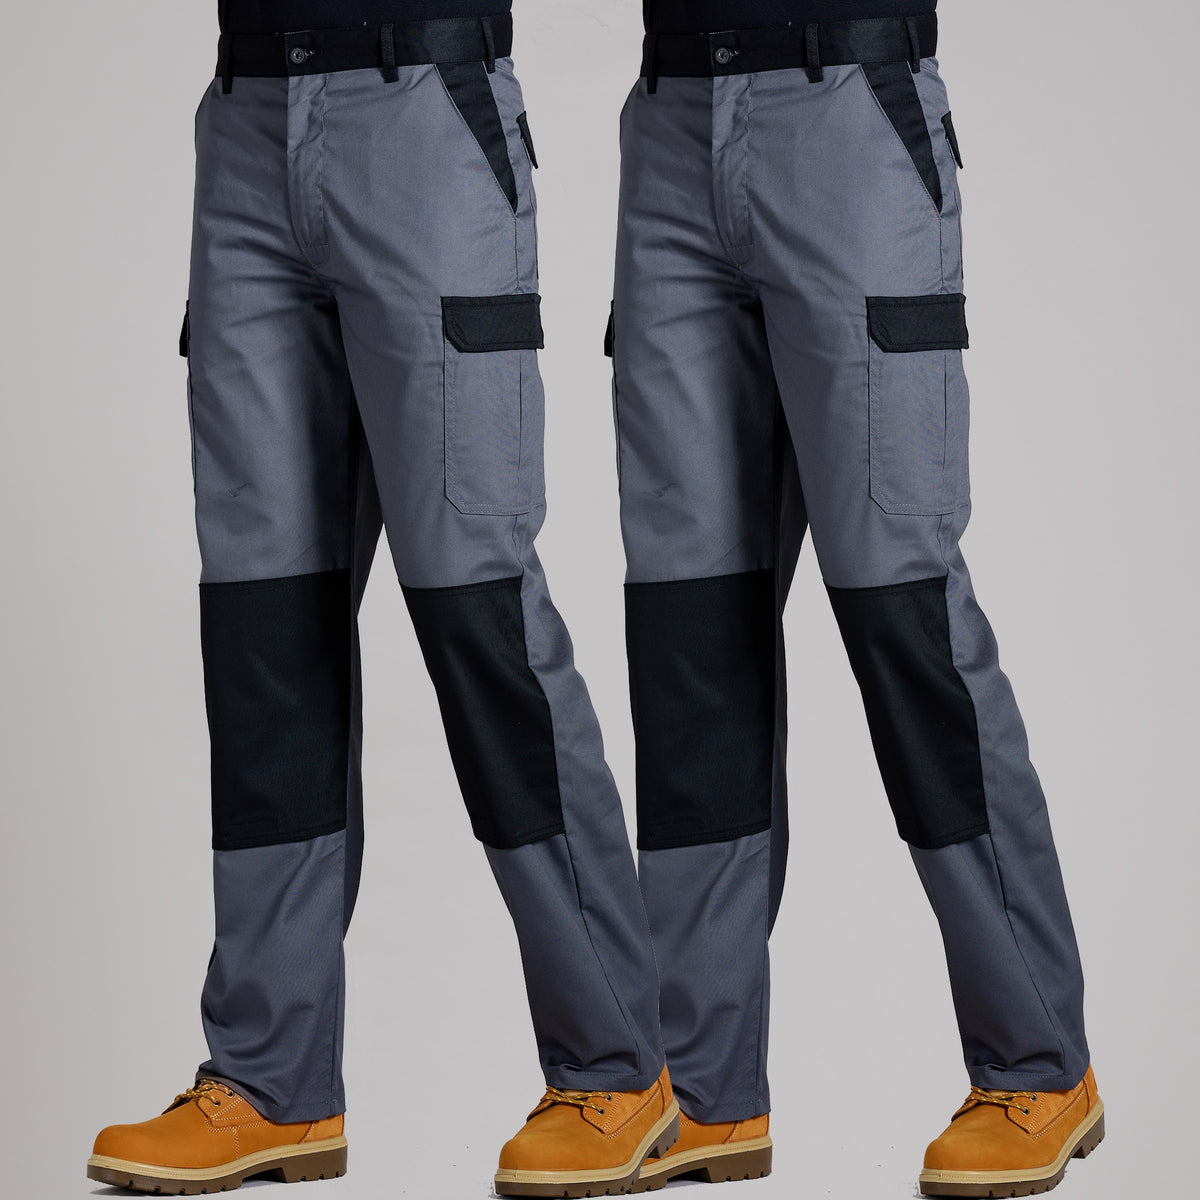 Mens Cargo Combat Work Pants Hi Viz Utility Trousers Holster amp Knee Pad  Pockets  eBay